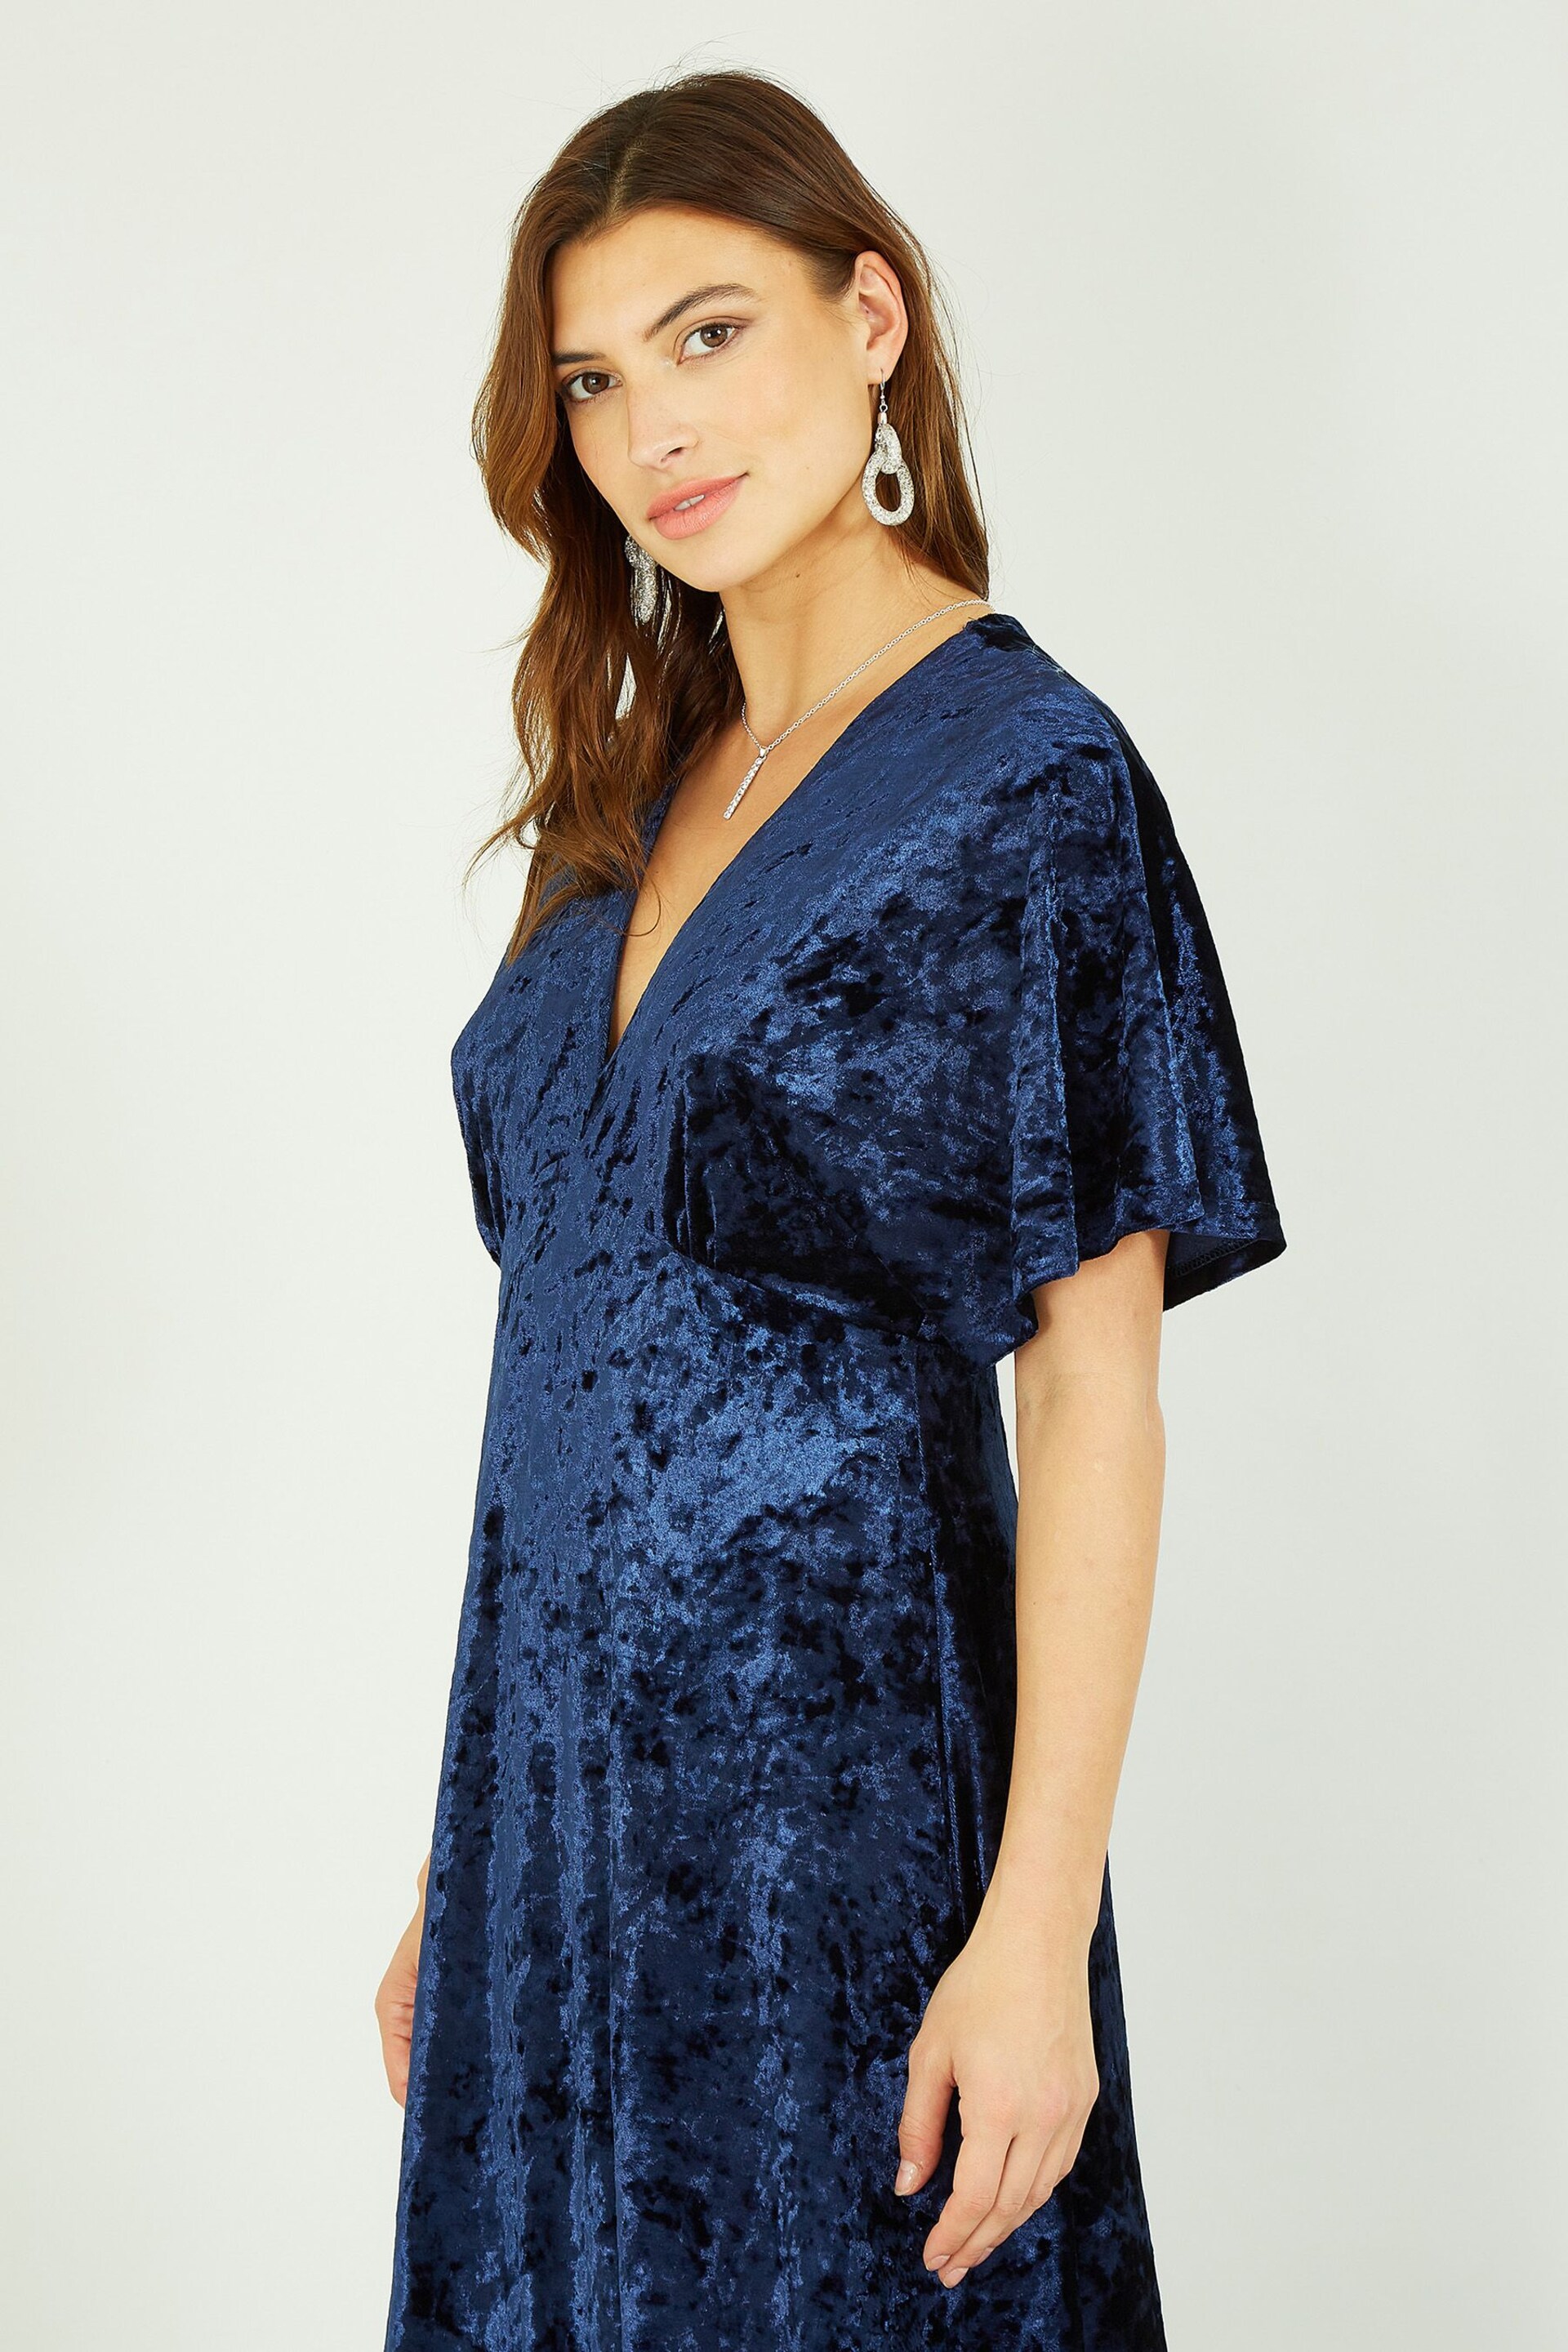 Yumi Blue Velvet Kimono Midi Dress - Image 2 of 5